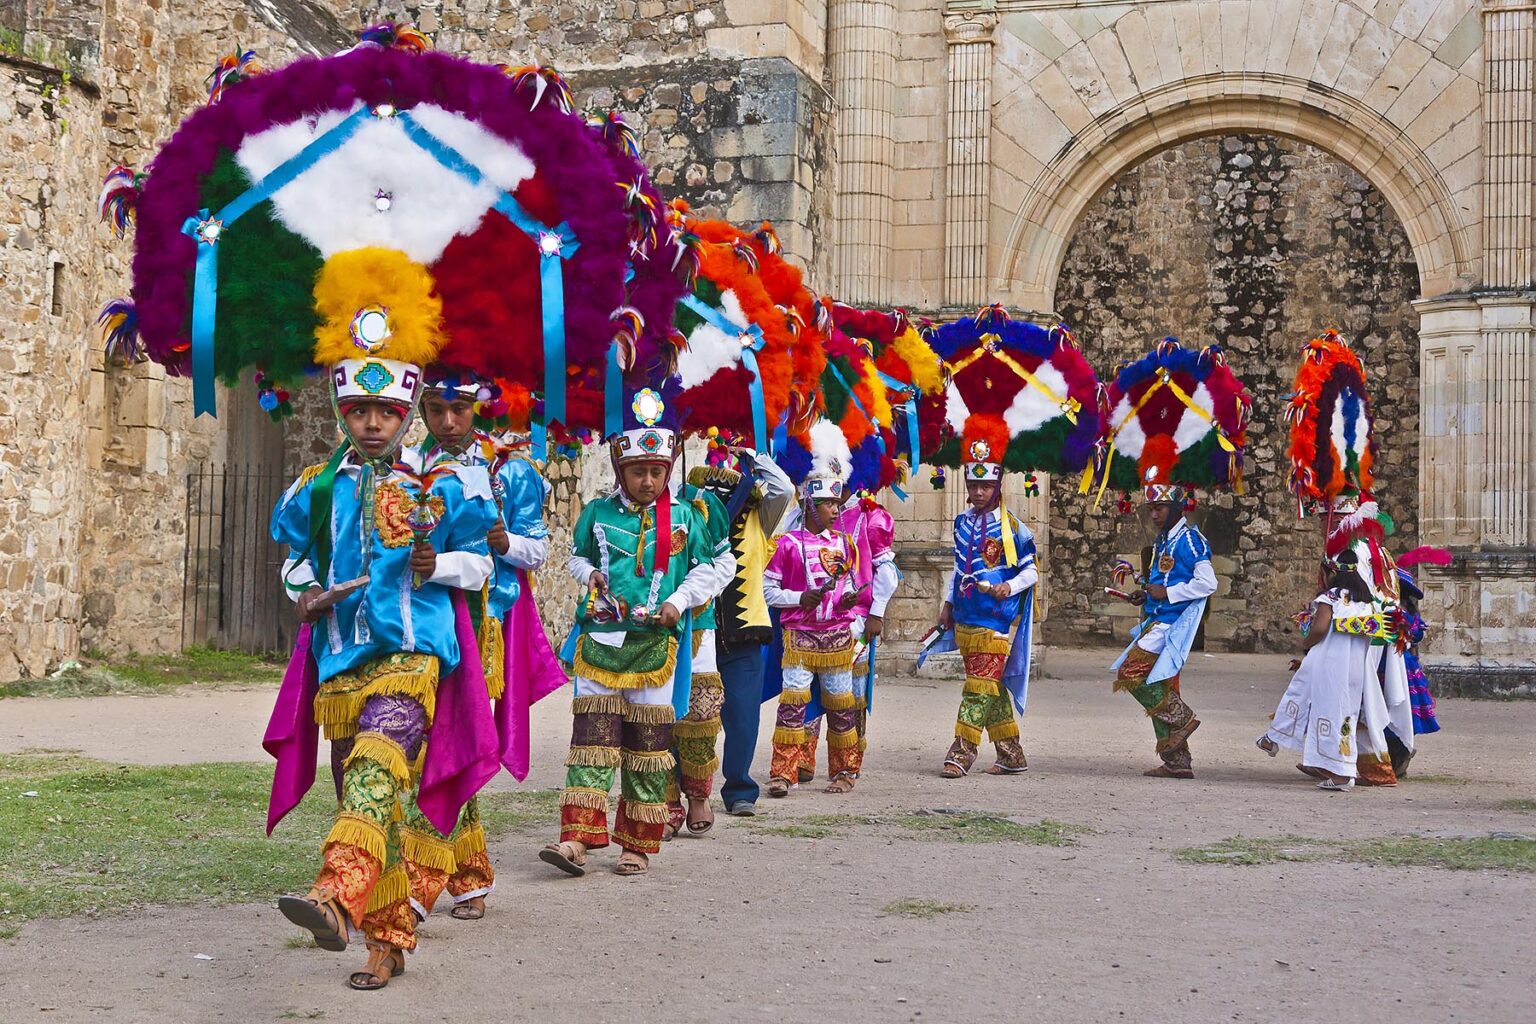 DANCERS reenact ZAPOTEC history during the GUELAGUETZA FESTIVAL - CUILAPAN, MEXICO near OAXACA